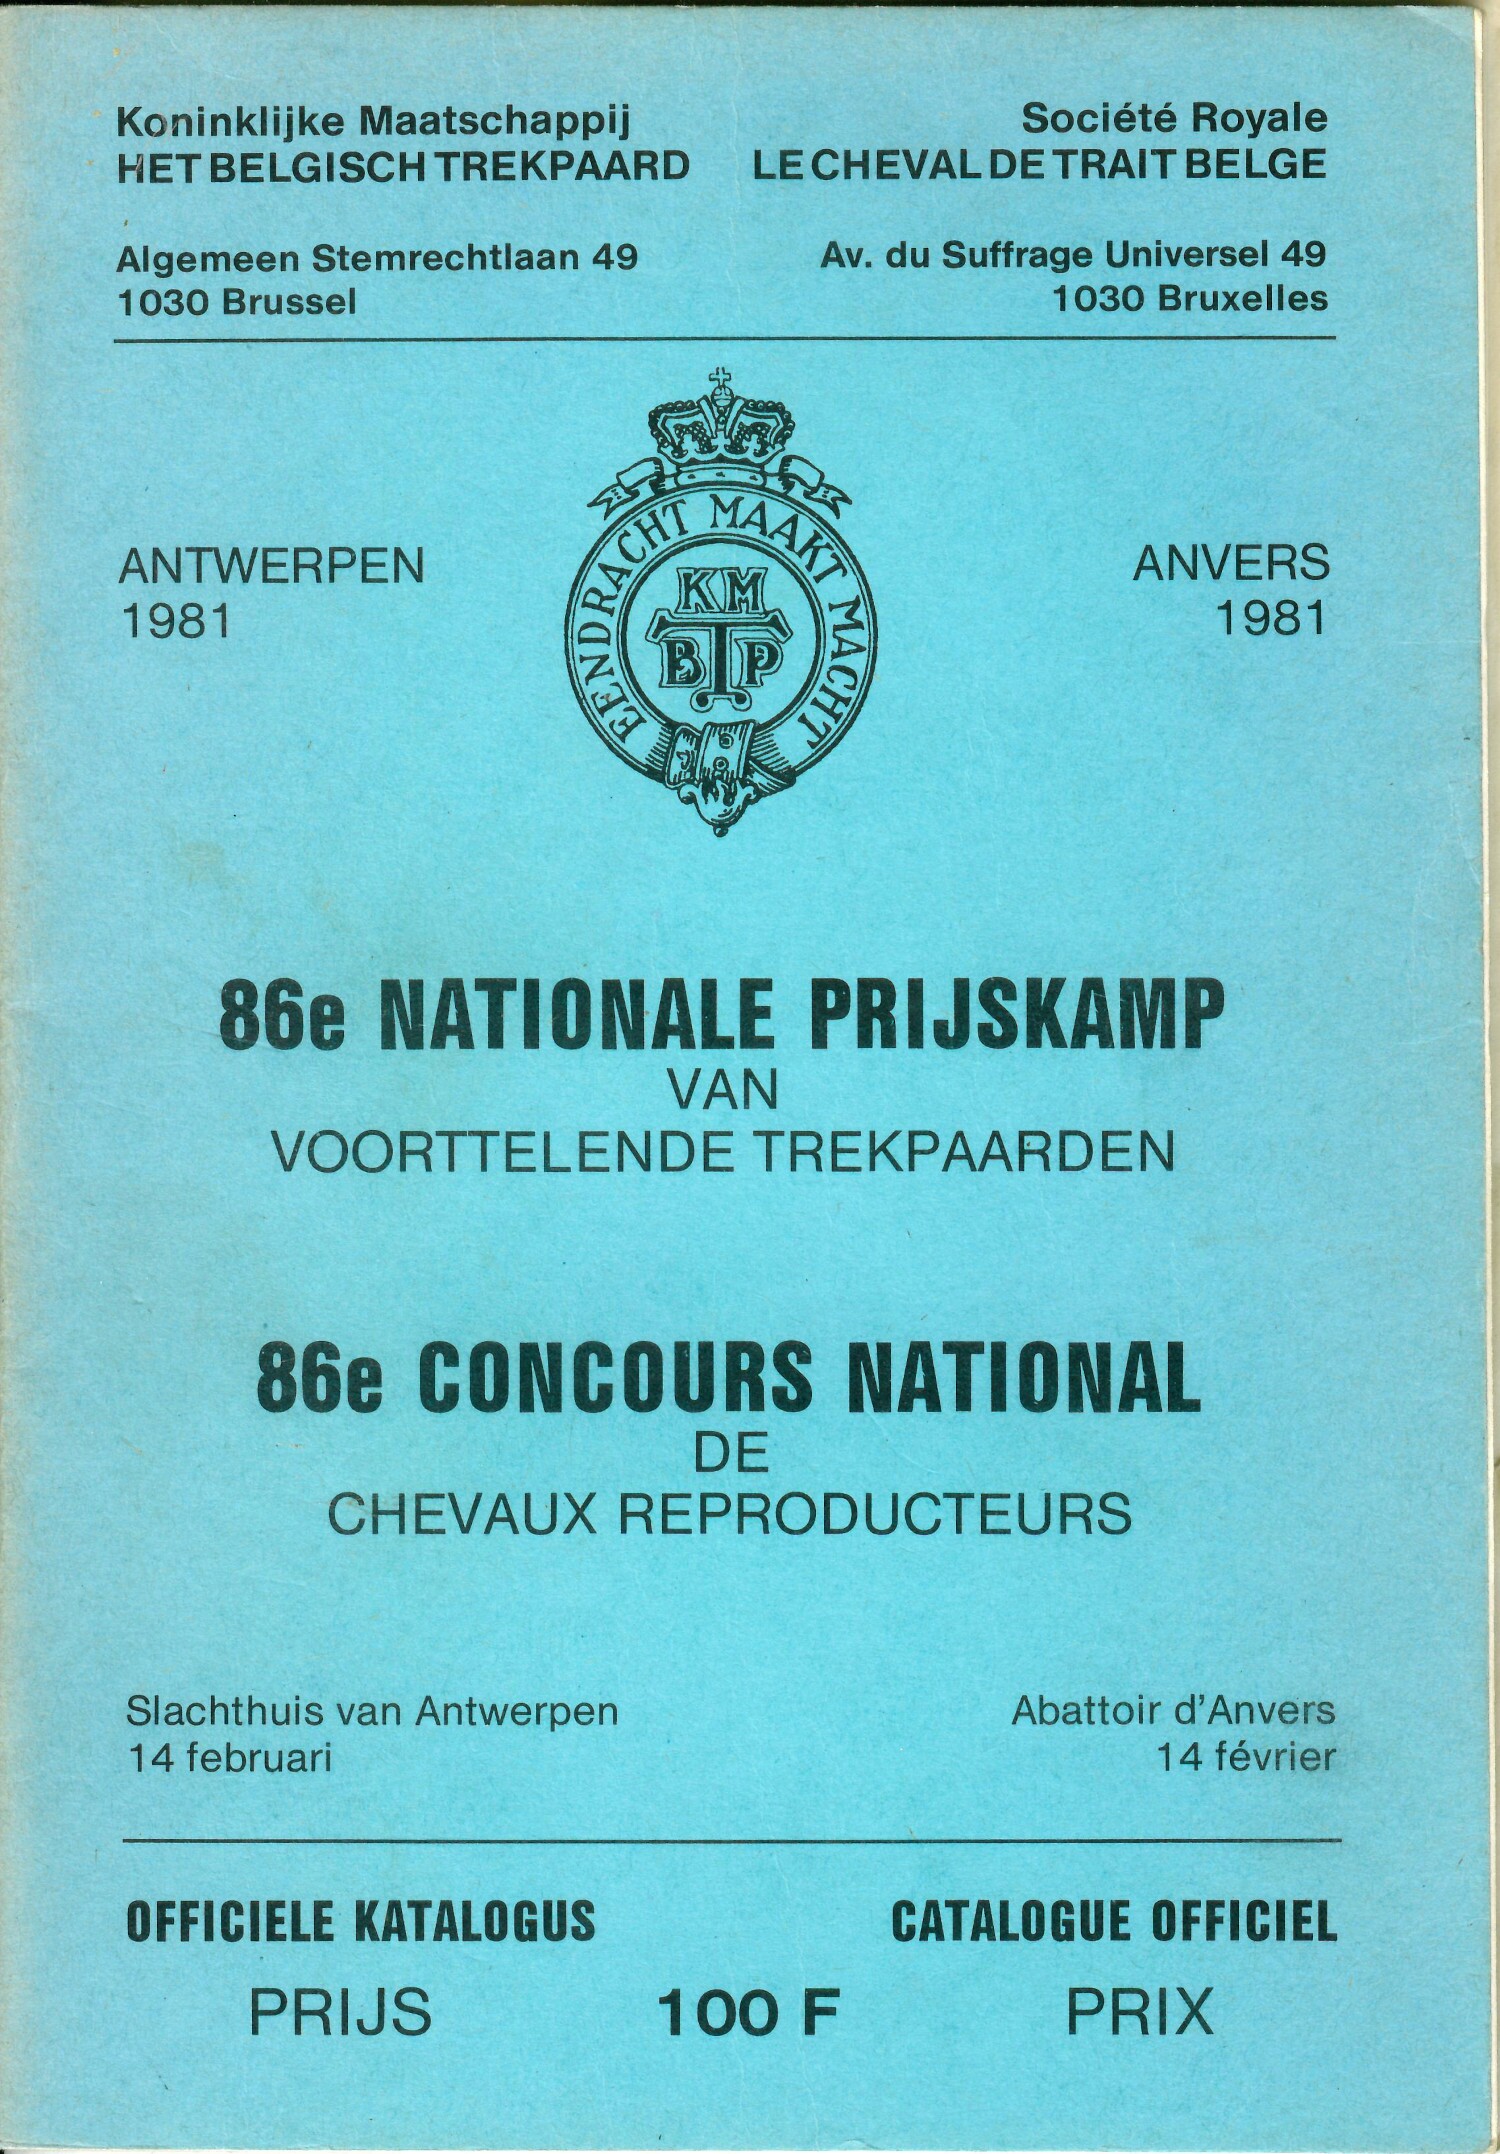 Les Cheval de trait belge et adennes 1981 (Herausgeber RR-R)